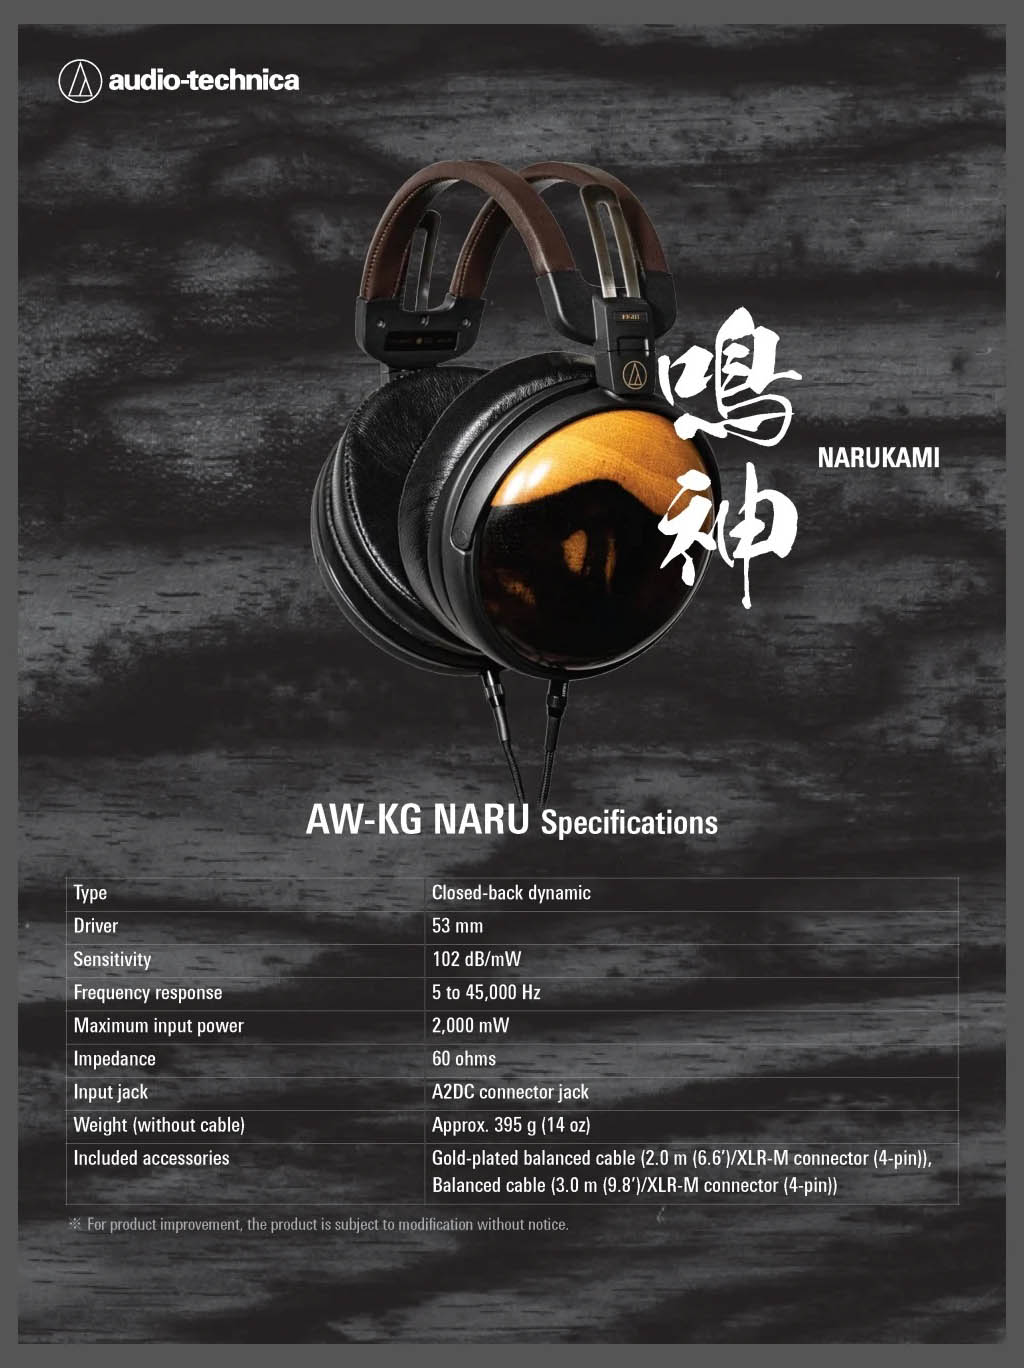 nghe_nhin_vietnam_review_chi_tiet_sieu_tai_nghe_ultra_high_end_headphone_audio_technica_narukami_gia_2_ty_700_trieu_vnd_h12.jpg (143 KB)